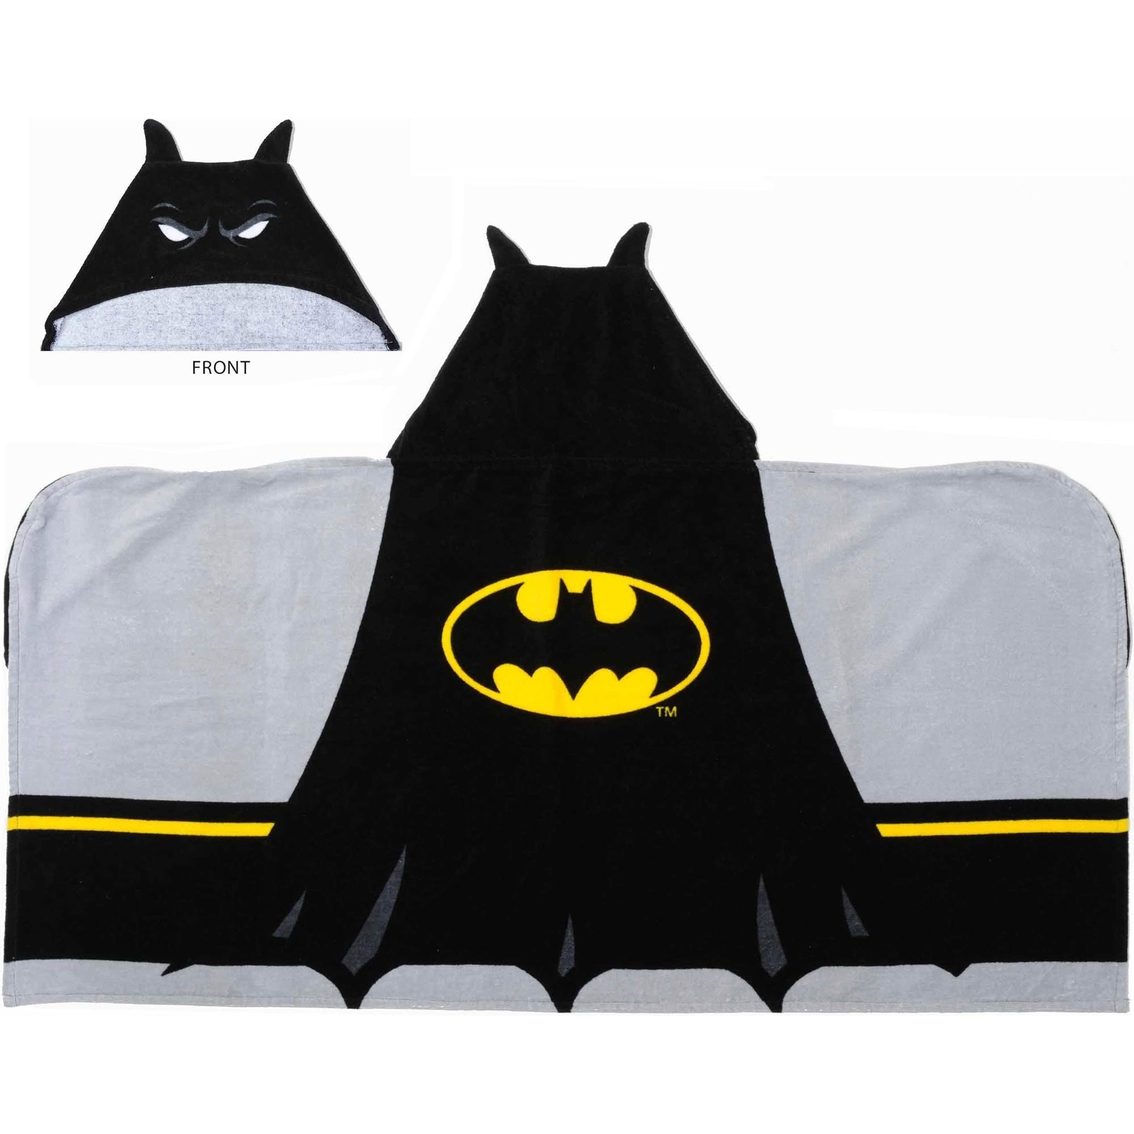 Warner Brothers Batman Logo Hooded Towel Wrap - Image 3 of 3